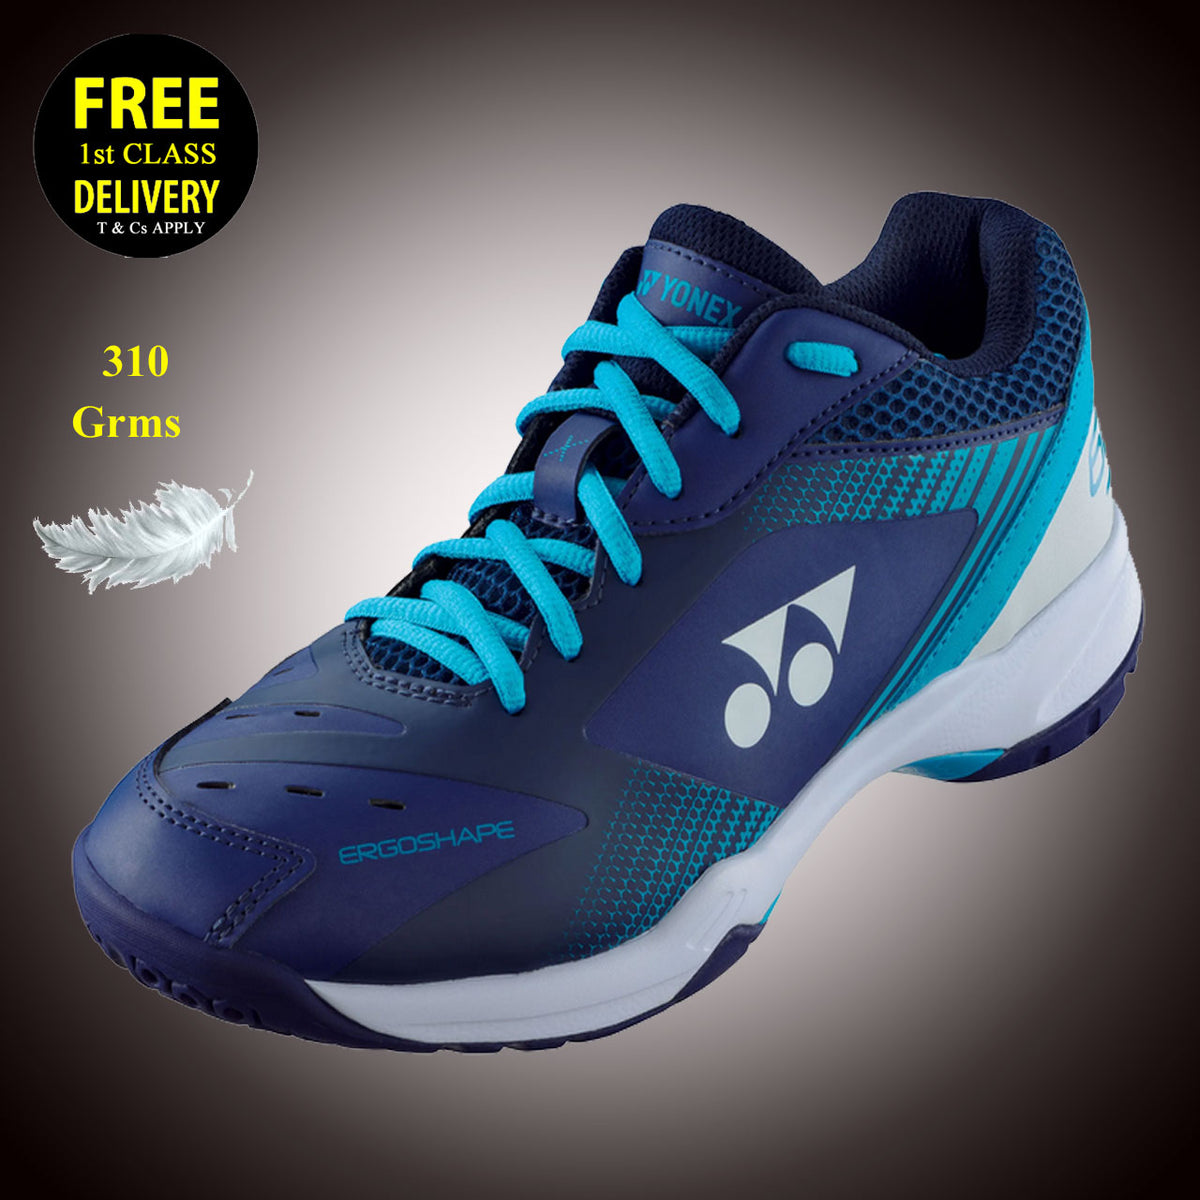 Yonex Power Cushion 65X3 SHB65X3MEX Badminton Shoes Mens (Navy Blue)